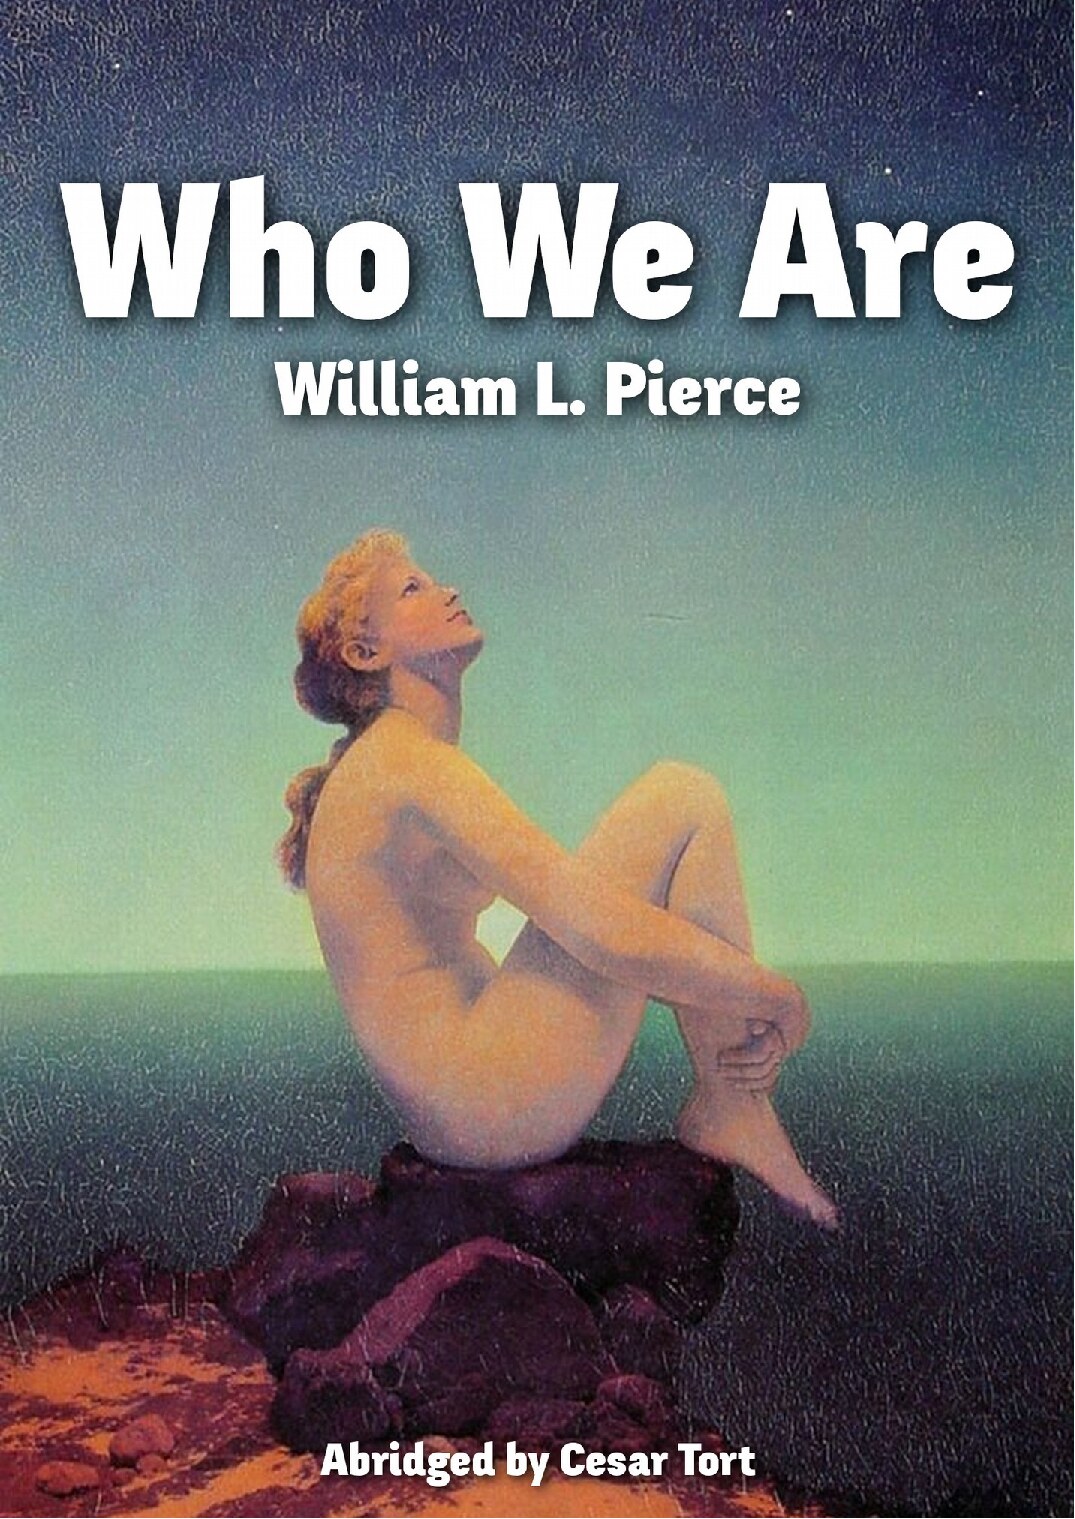 Pierce, William L.; Who We Are